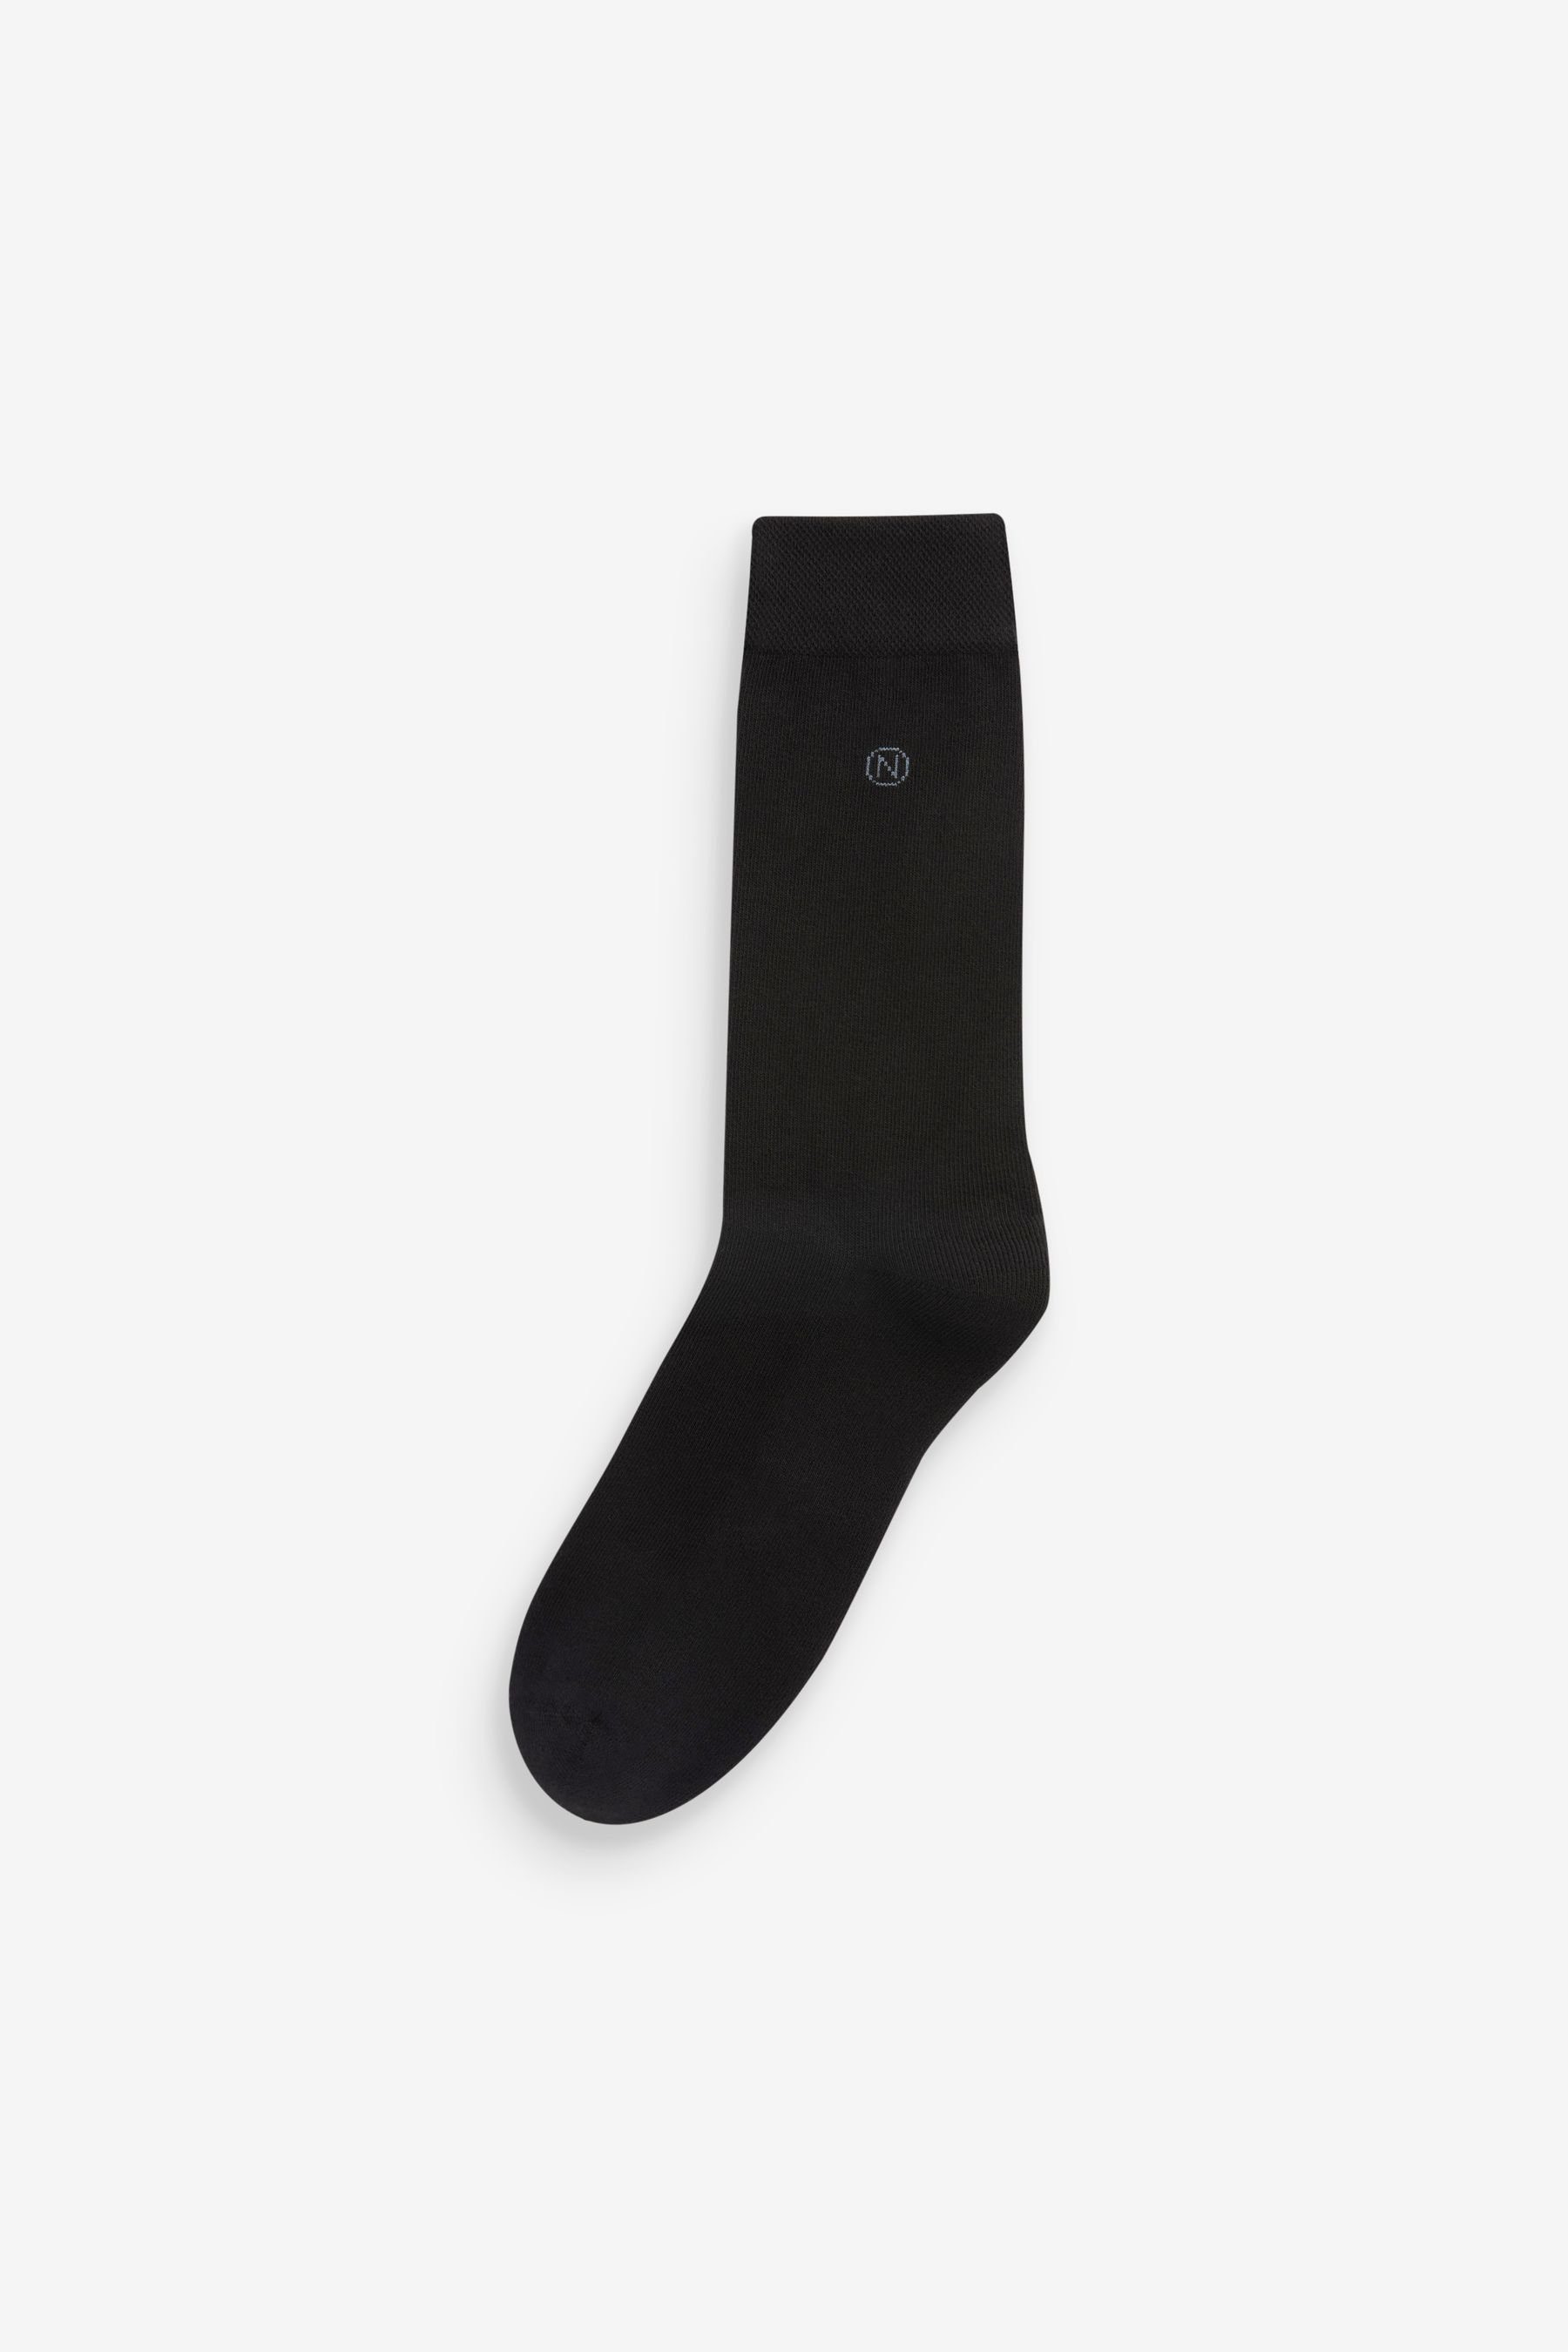 Kurzsocken mit Socken (10-Paar) gepolsterter Black 10er-Pack Next Sohle,